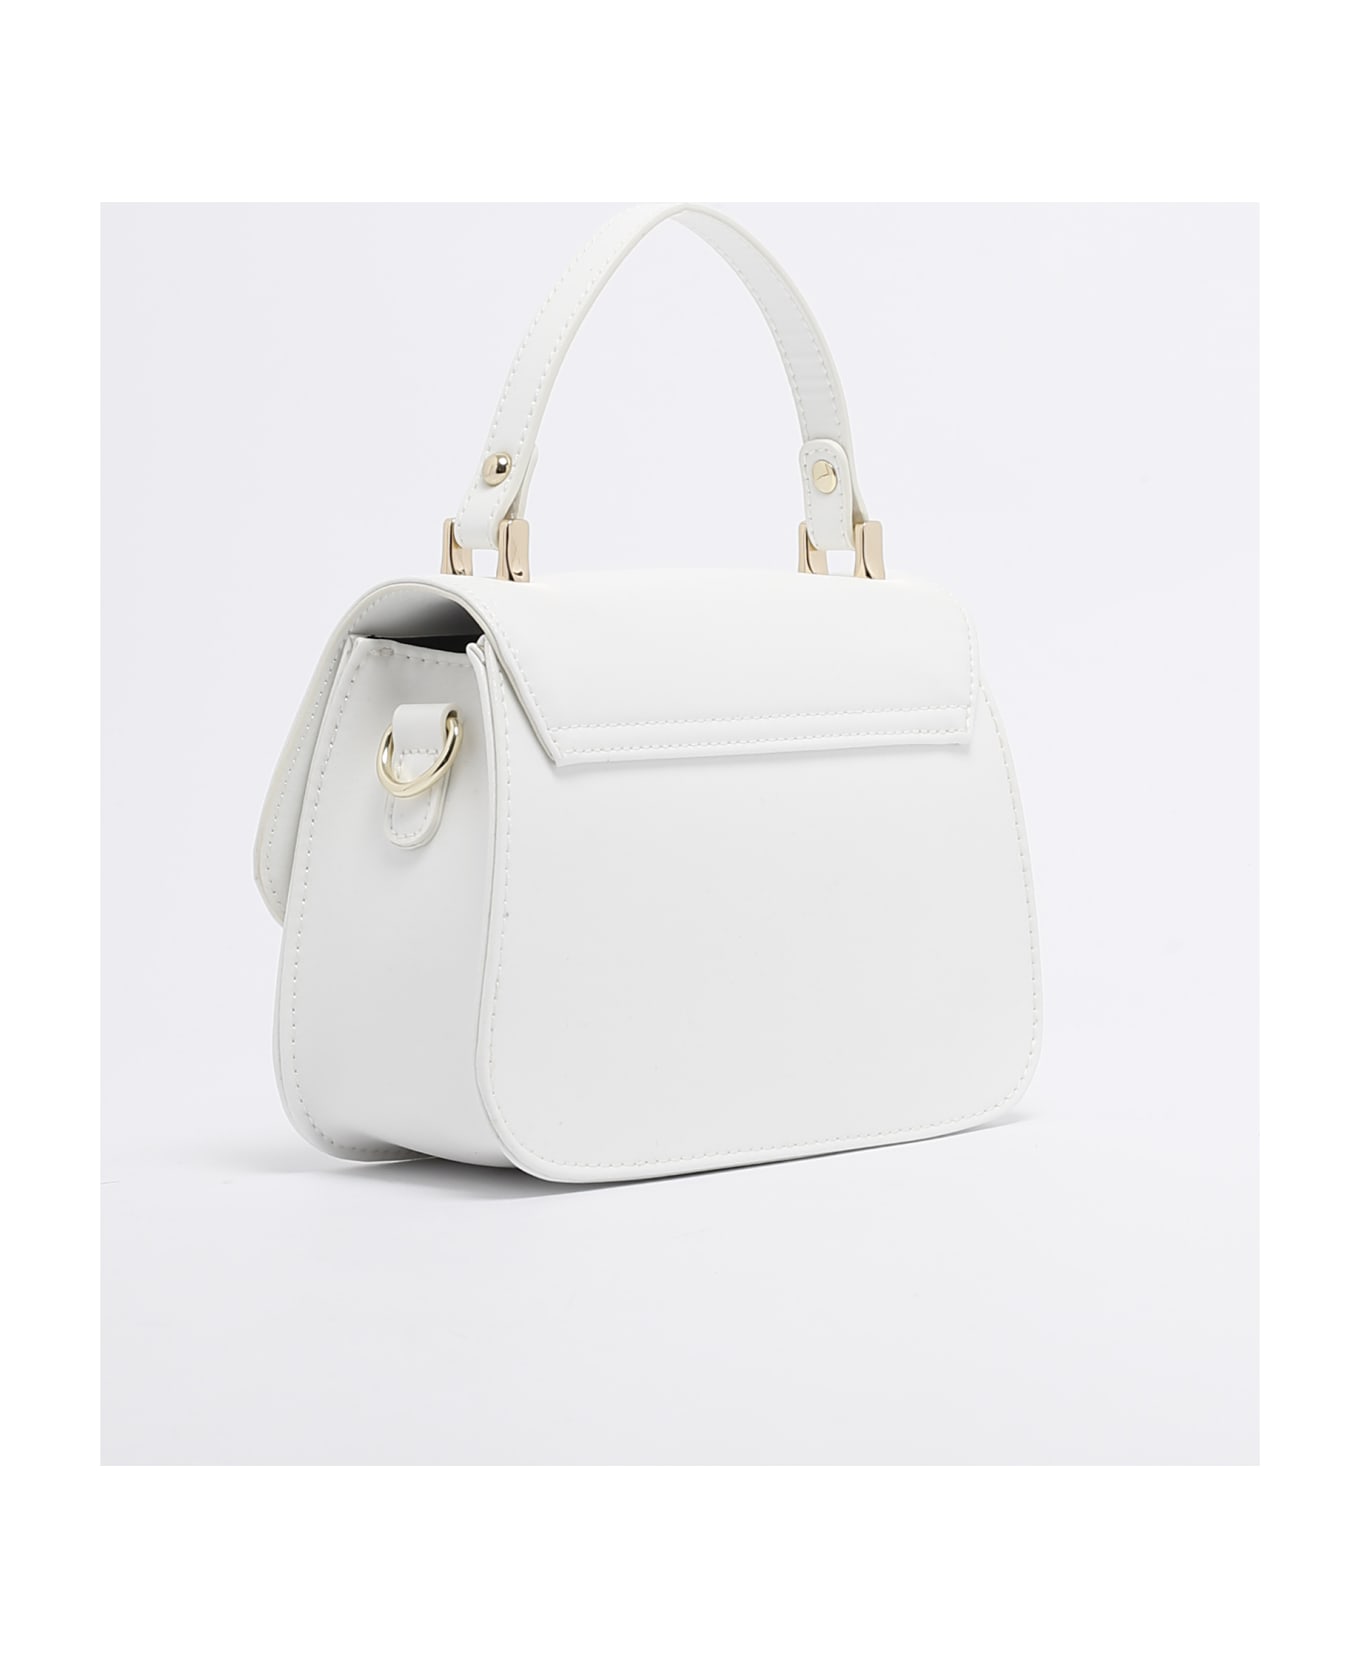 Monnalisa Handbag Shoulder Bag - BIANCO アクセサリー＆ギフト